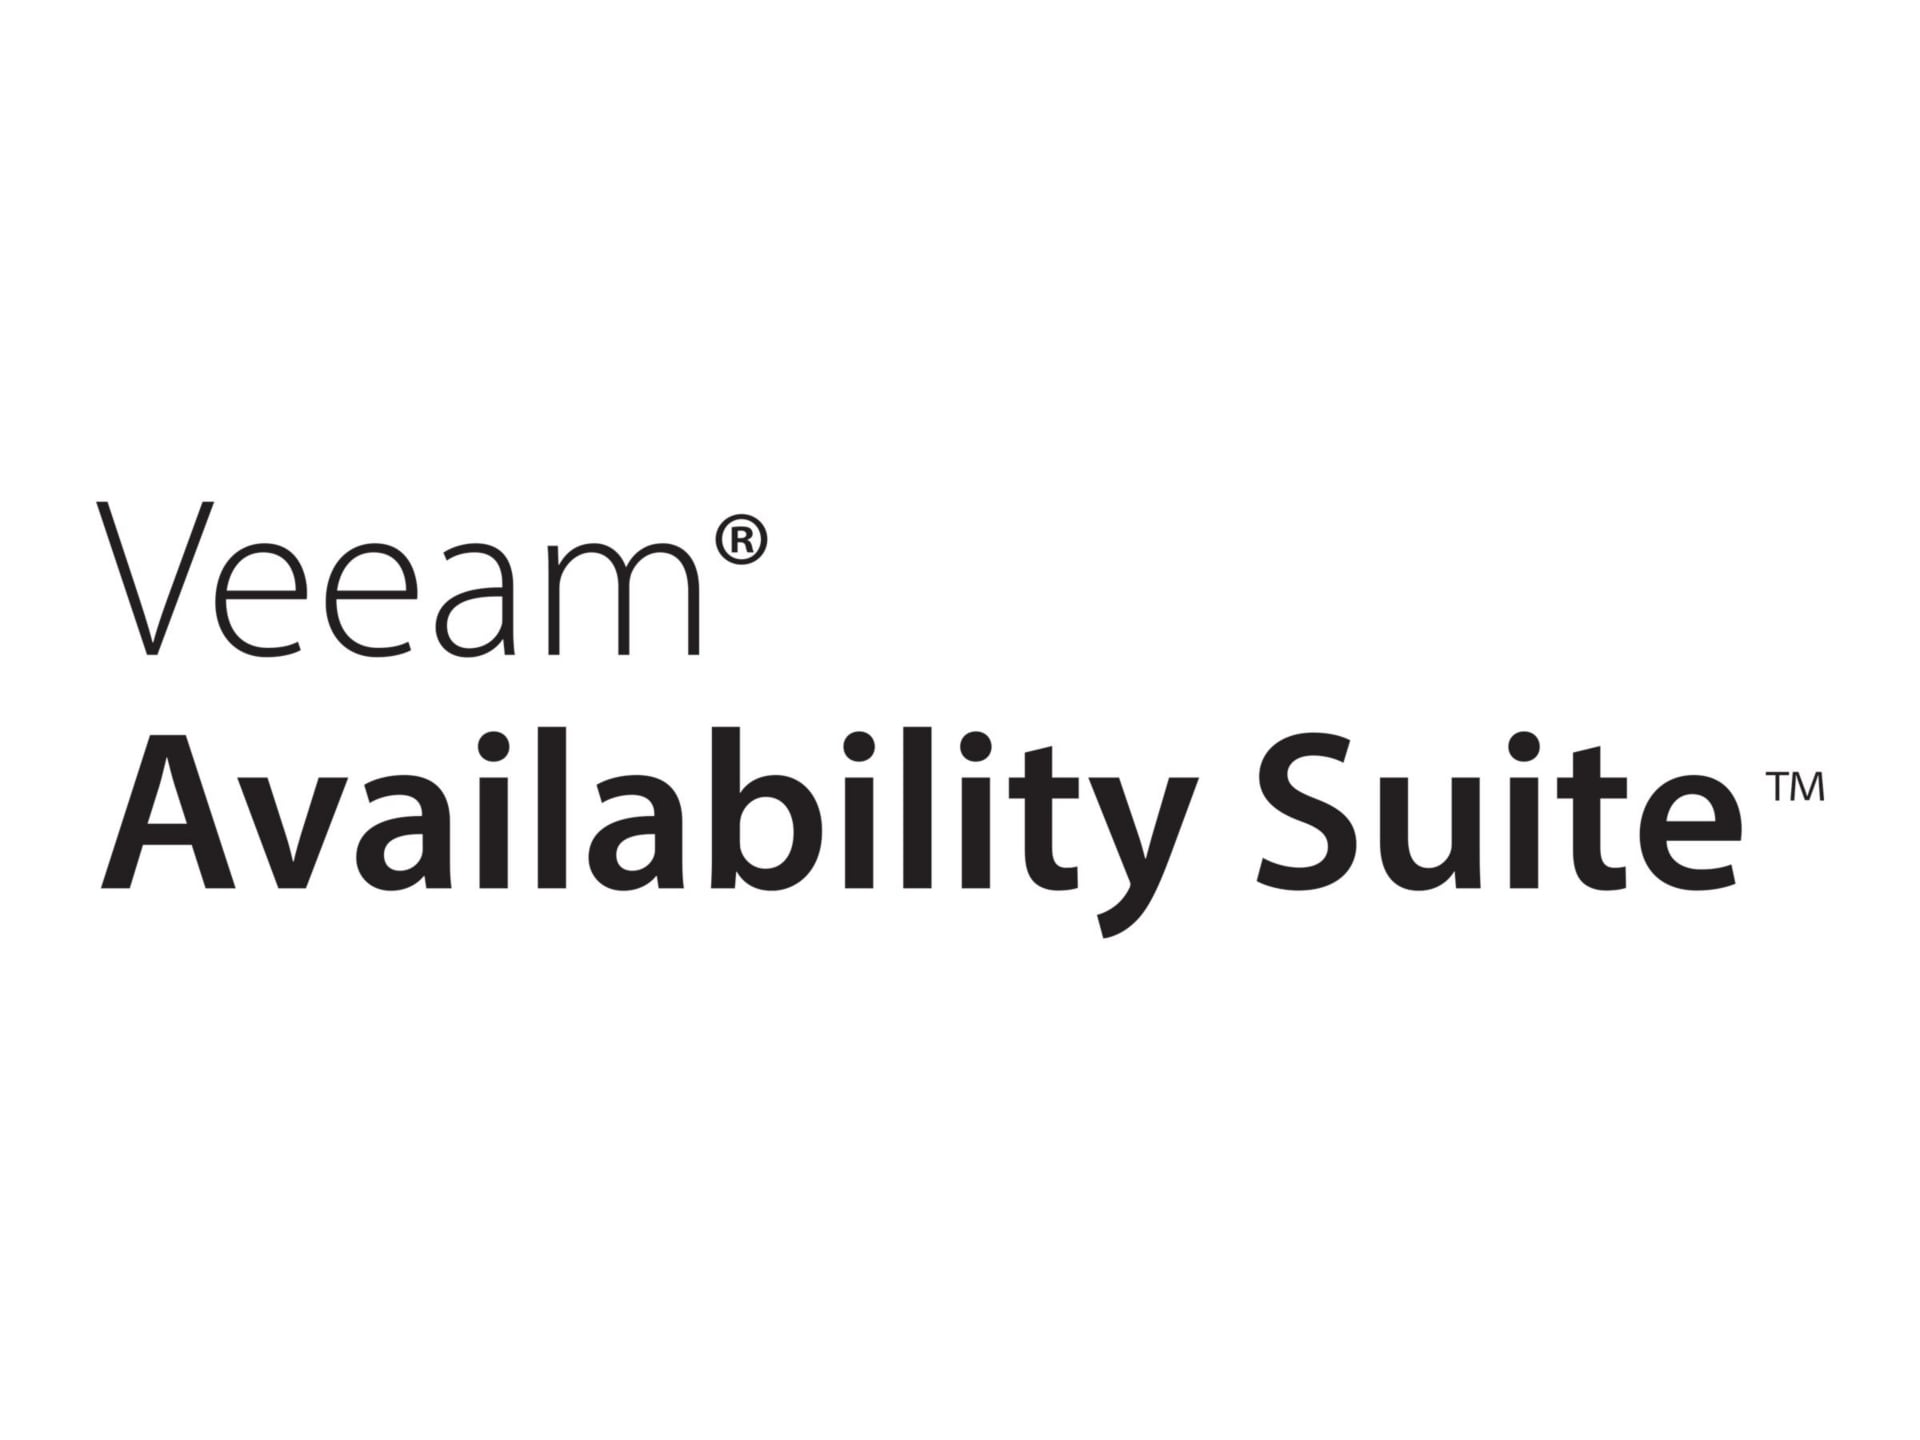 Veeam Availability Suite Enterprise - Upfront Billing License (1 month) + Production Support - 2 sockets